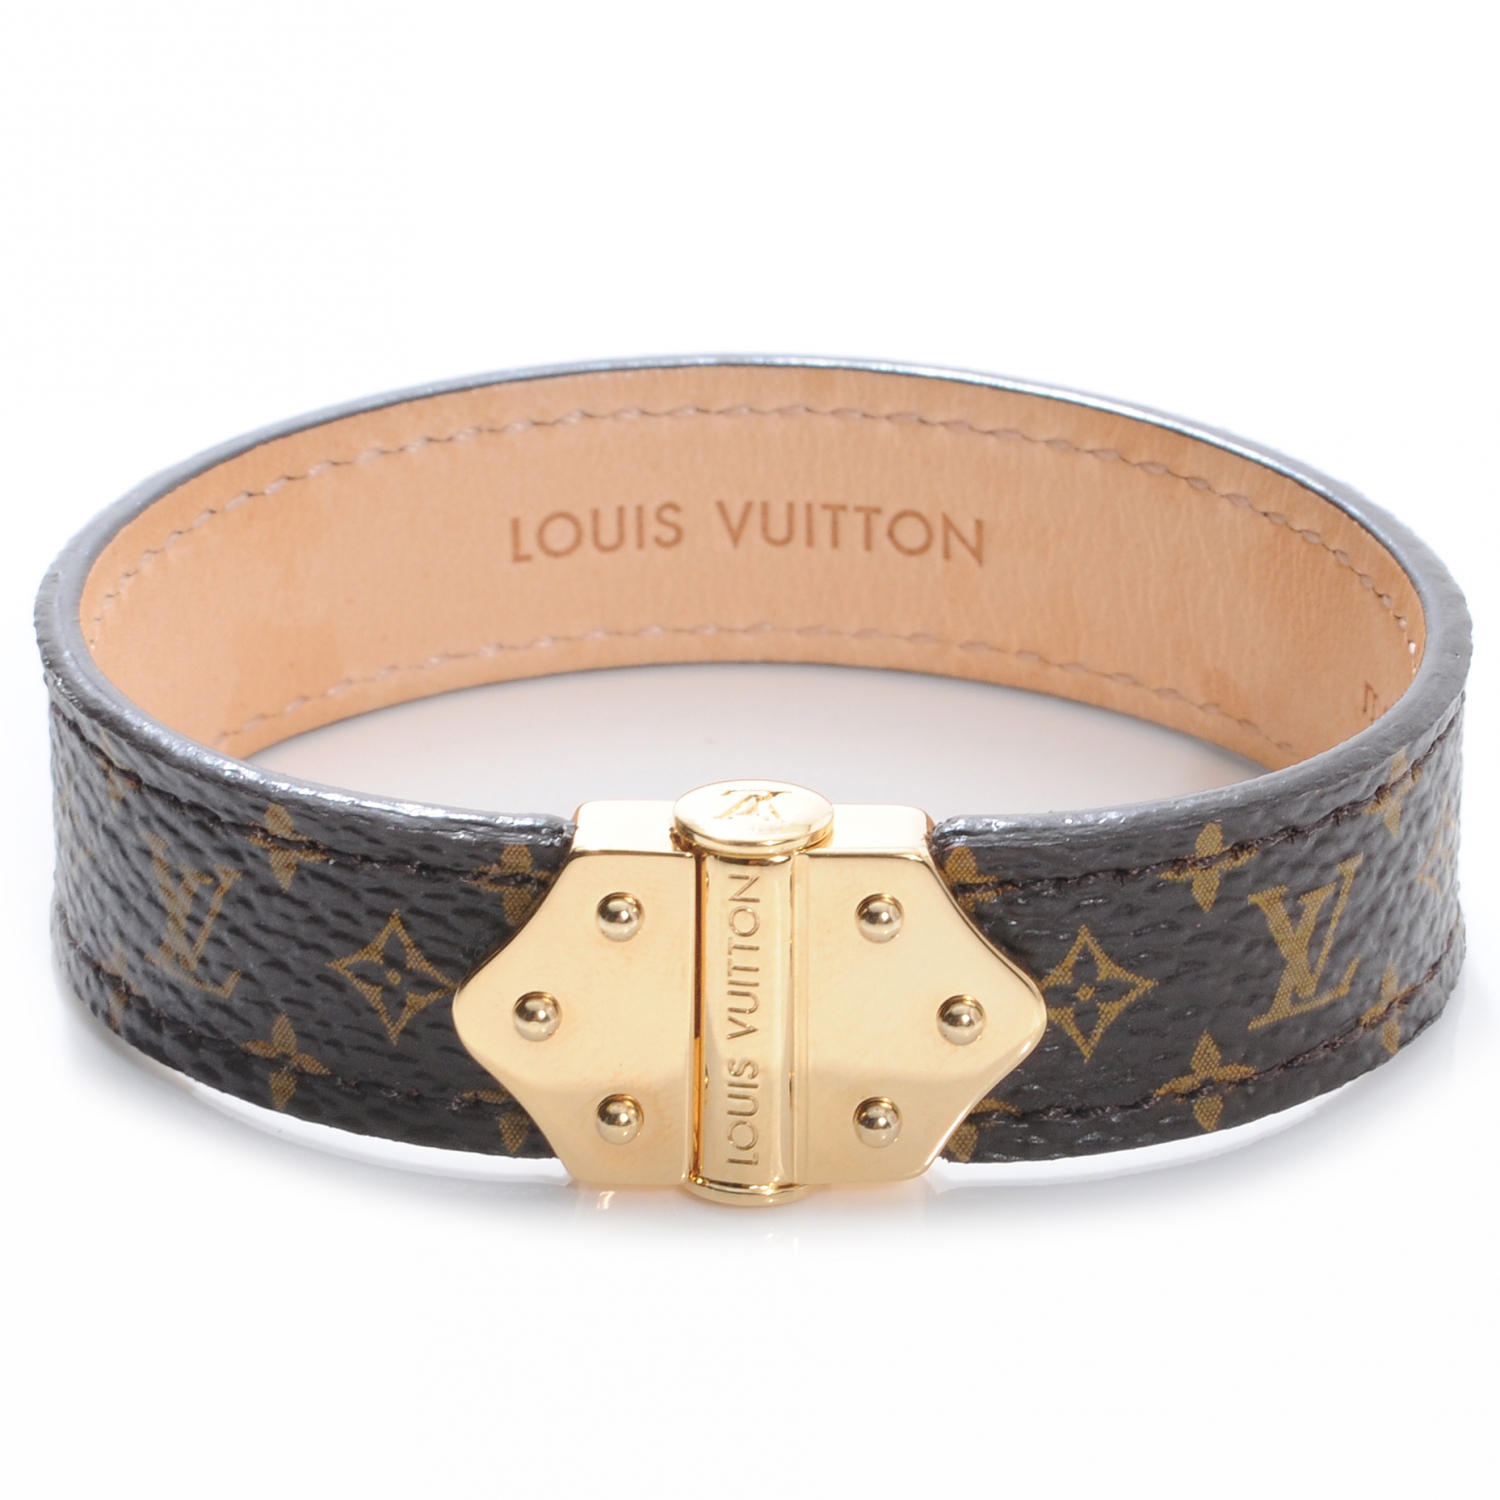 Louis Vuitton Size Chart Bracelet | Literacy Ontario Central South